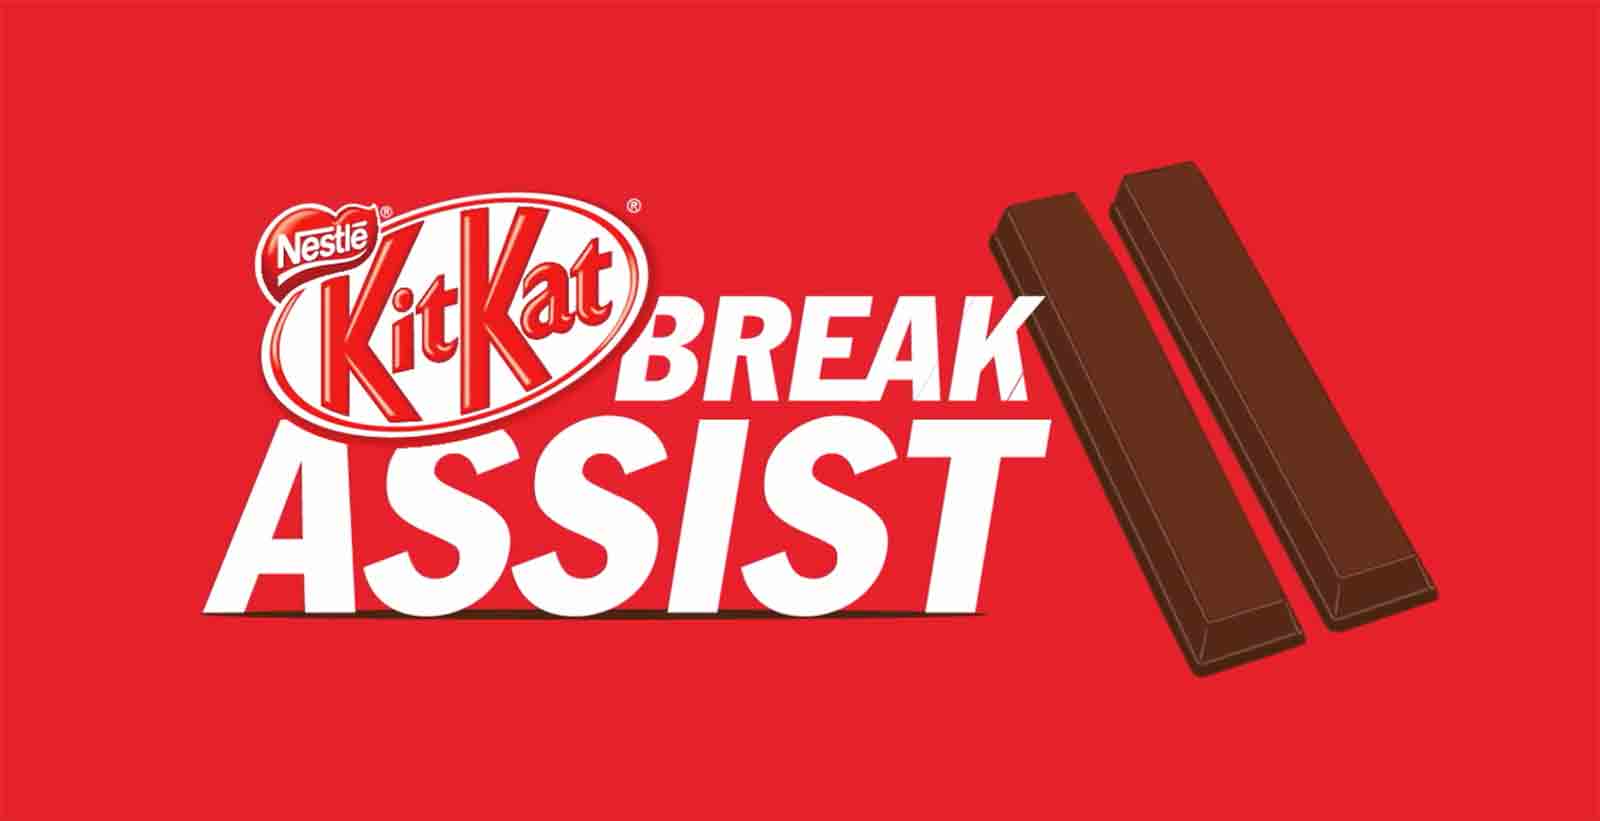 Nestlé Kit Kat Break Assist